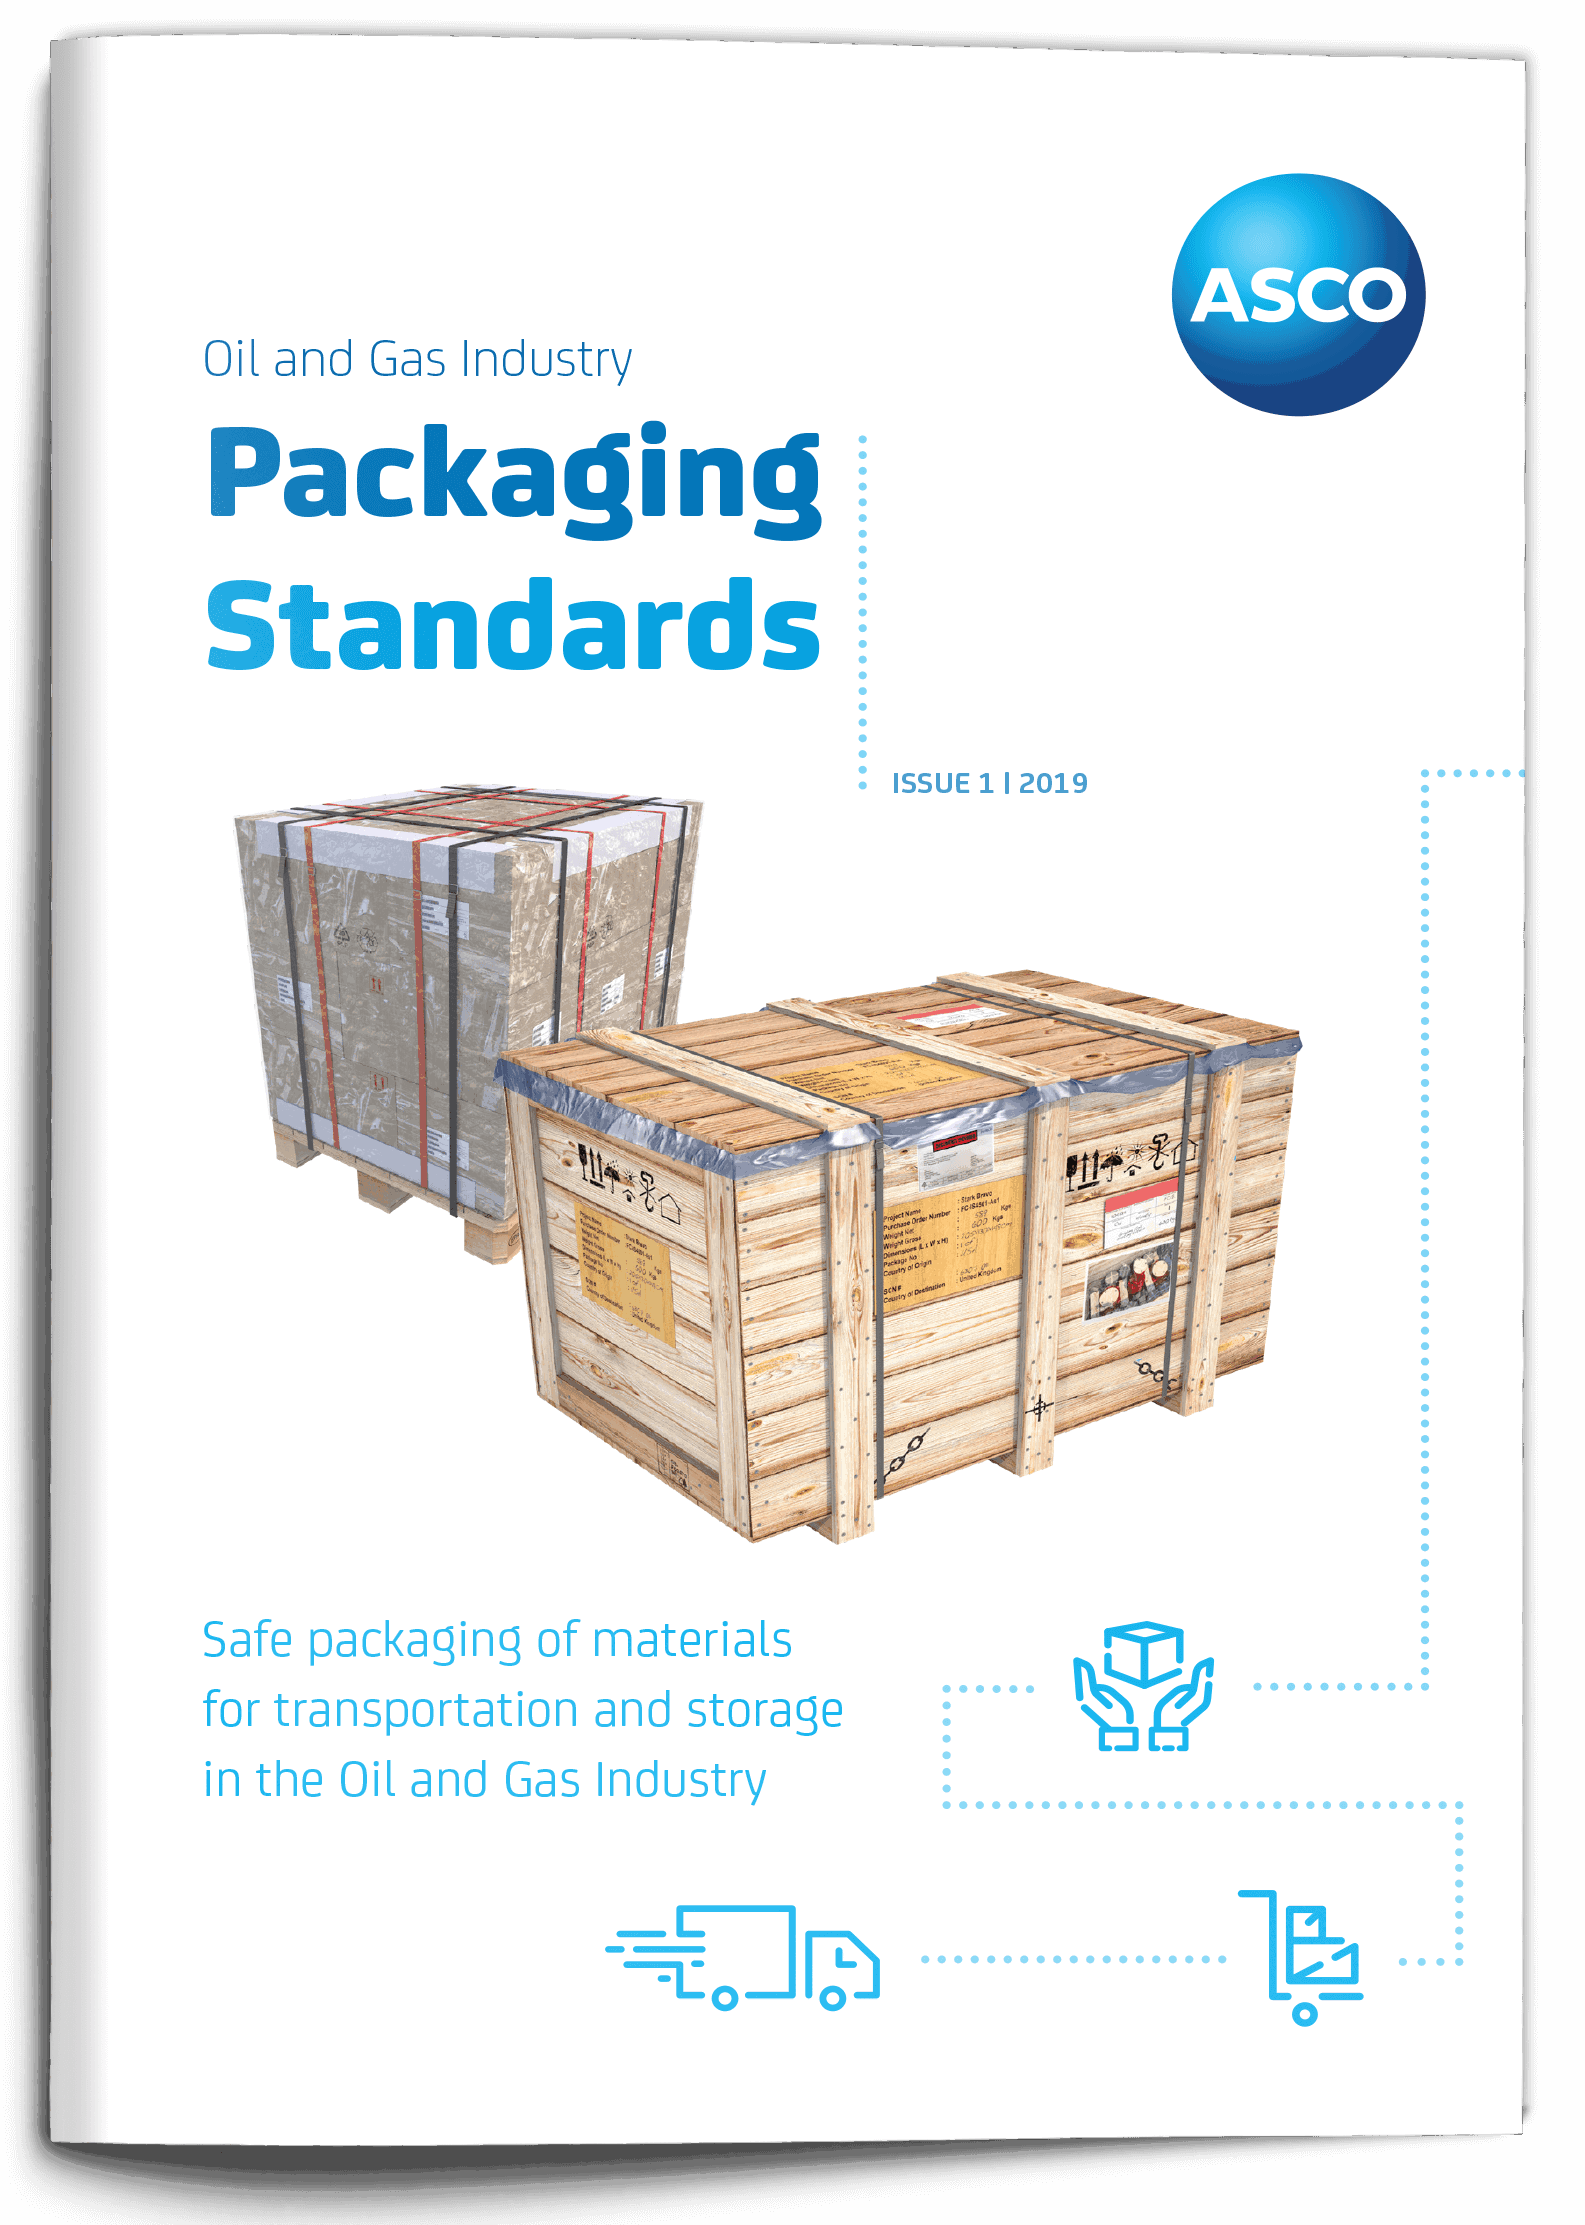 ASCO Packaging Standards